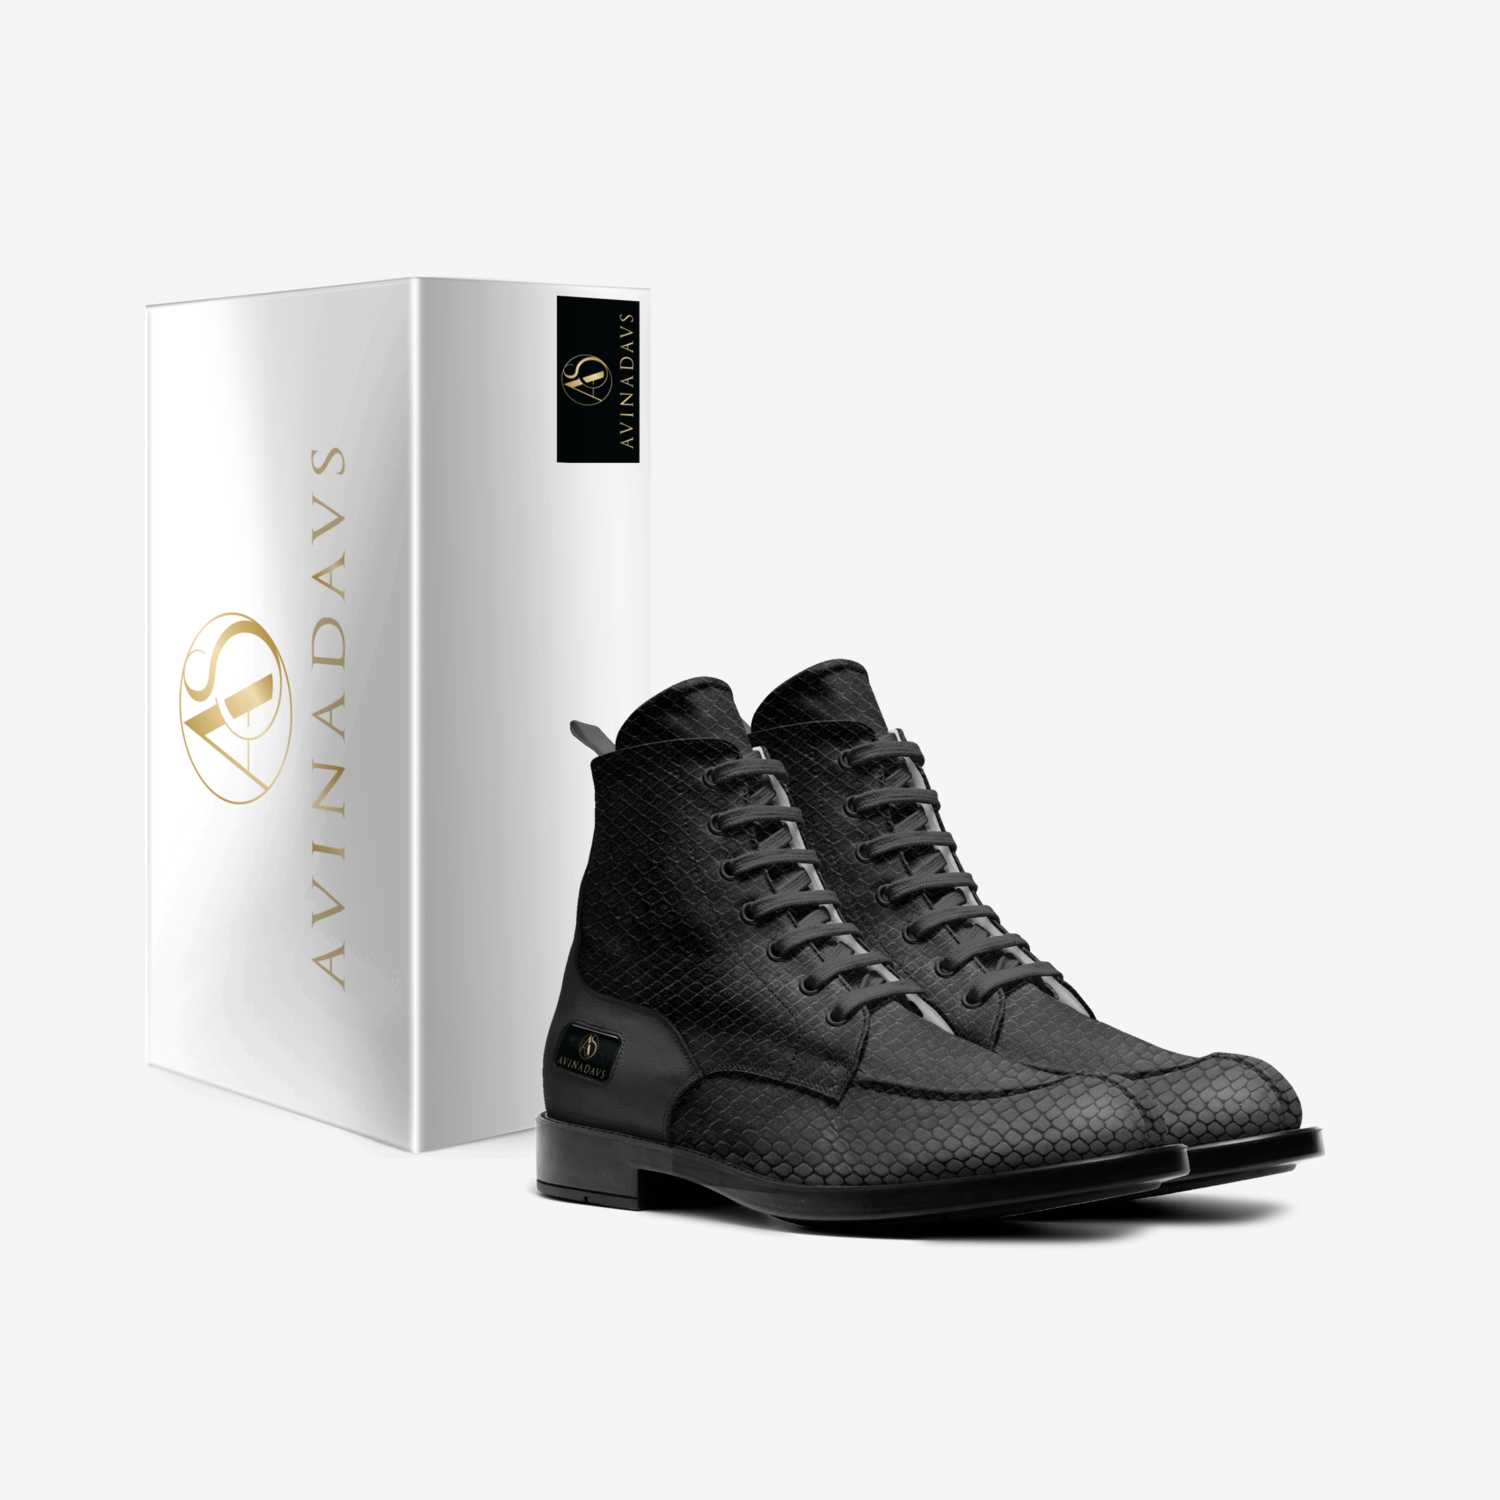 Avinadavs custom made in Italy shoes by Avinadav Sabaitis | Box view